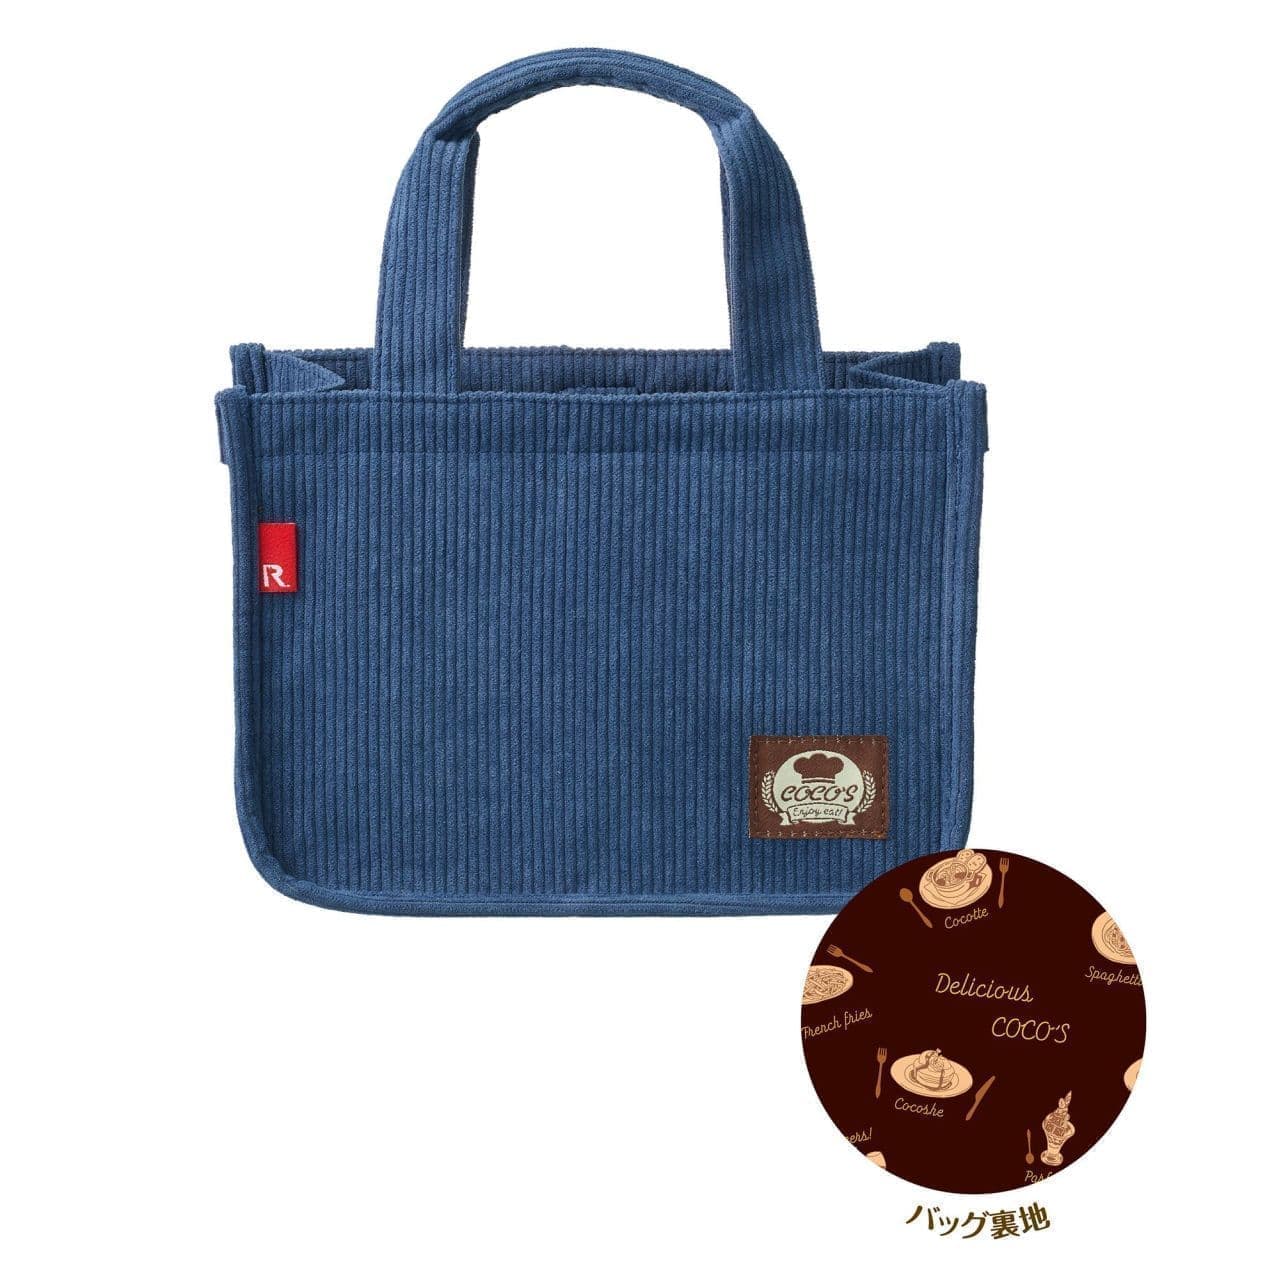 "Cocos lucky bag" Lutoto collaboration original tote bag